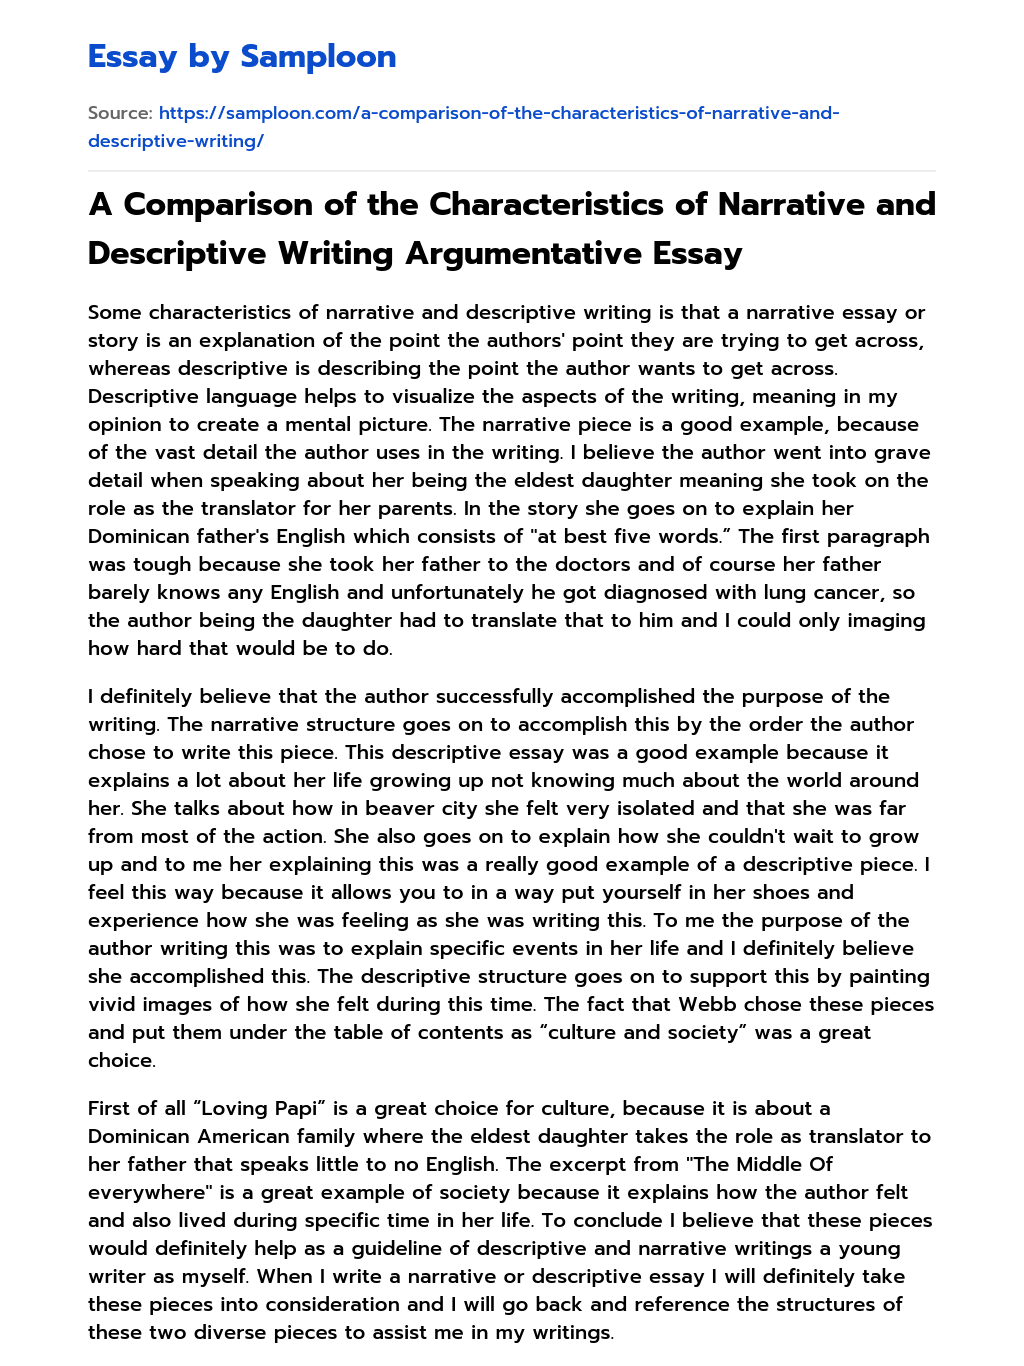 A Comparison of the Characteristics of Narrative and Descriptive Writing Argumentative Essay essay